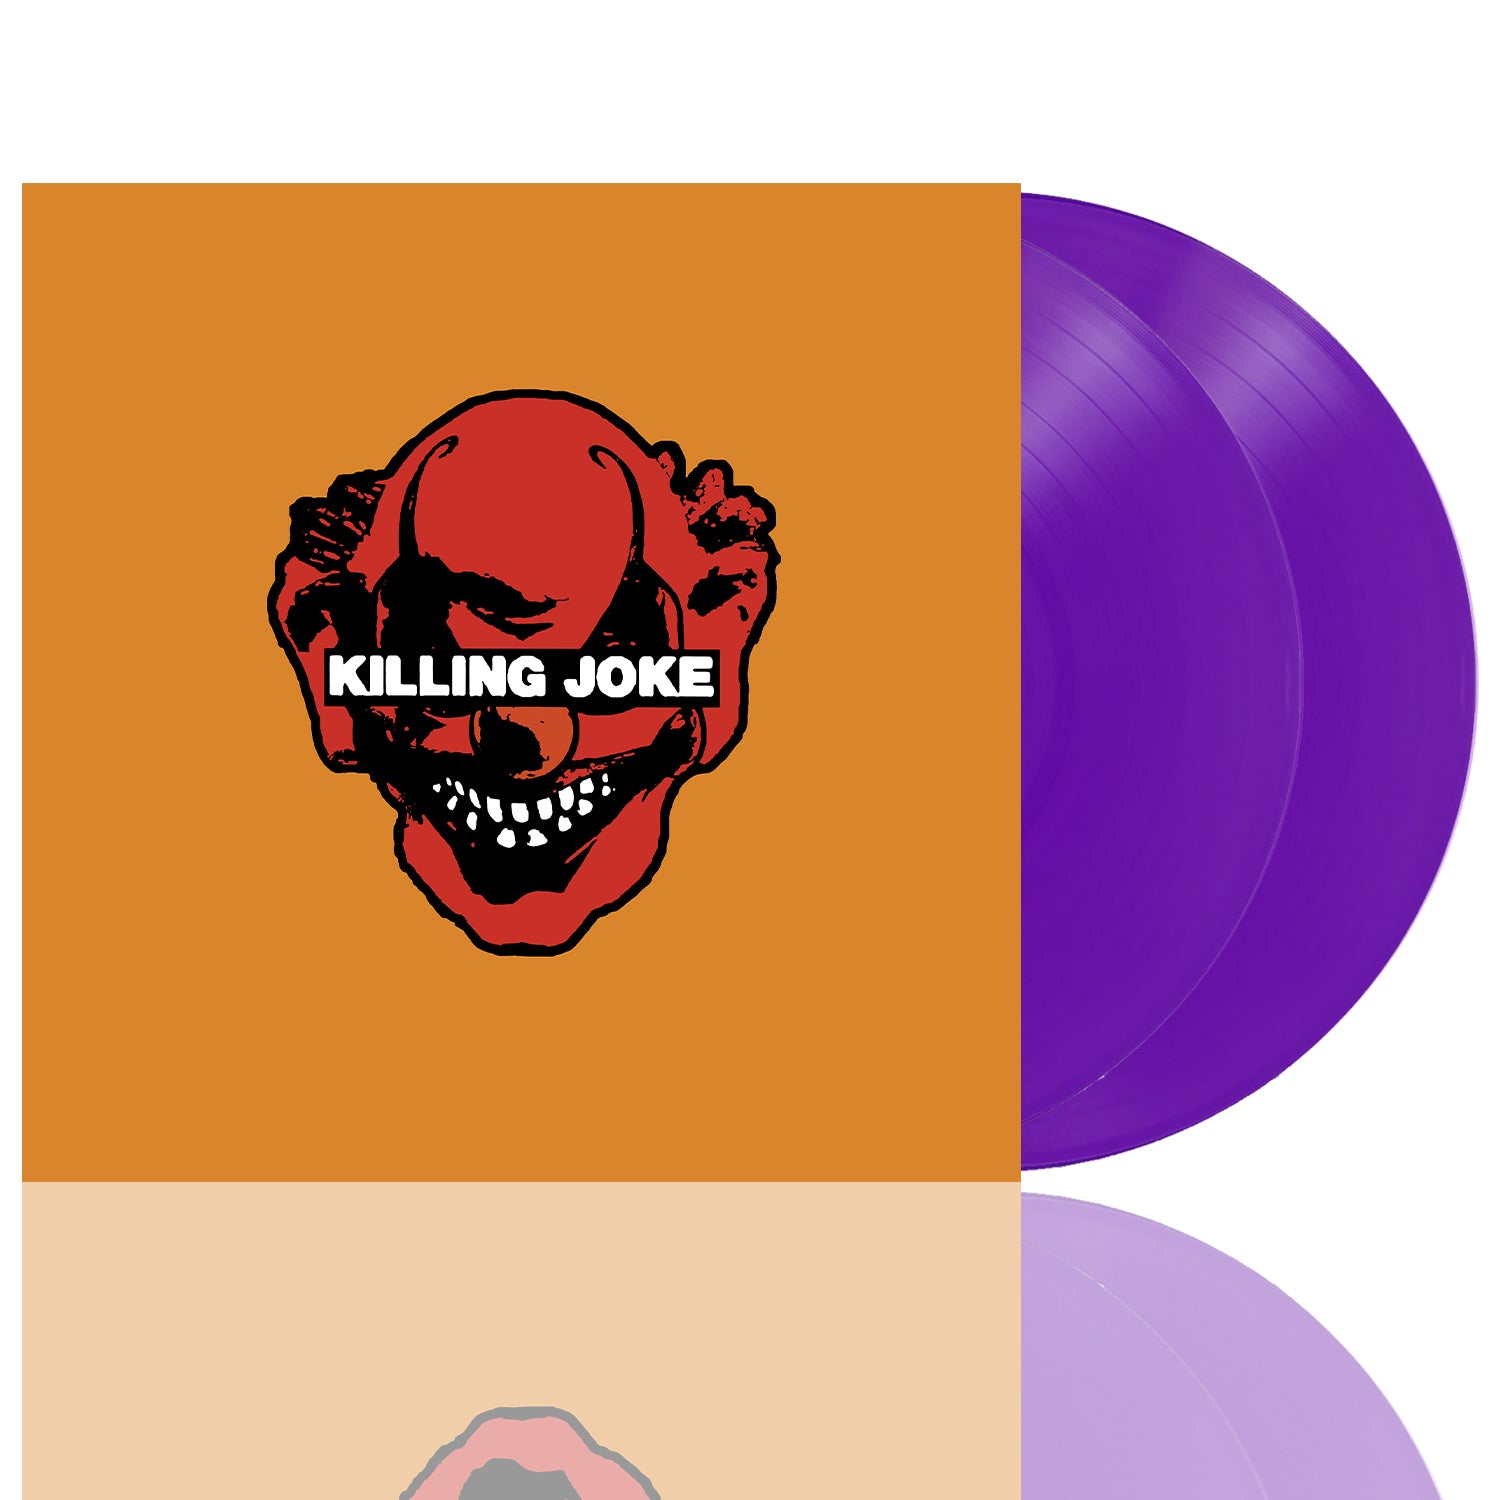 Killing Joke - Killing Joke 2003 (2LP Purple Vinyl)